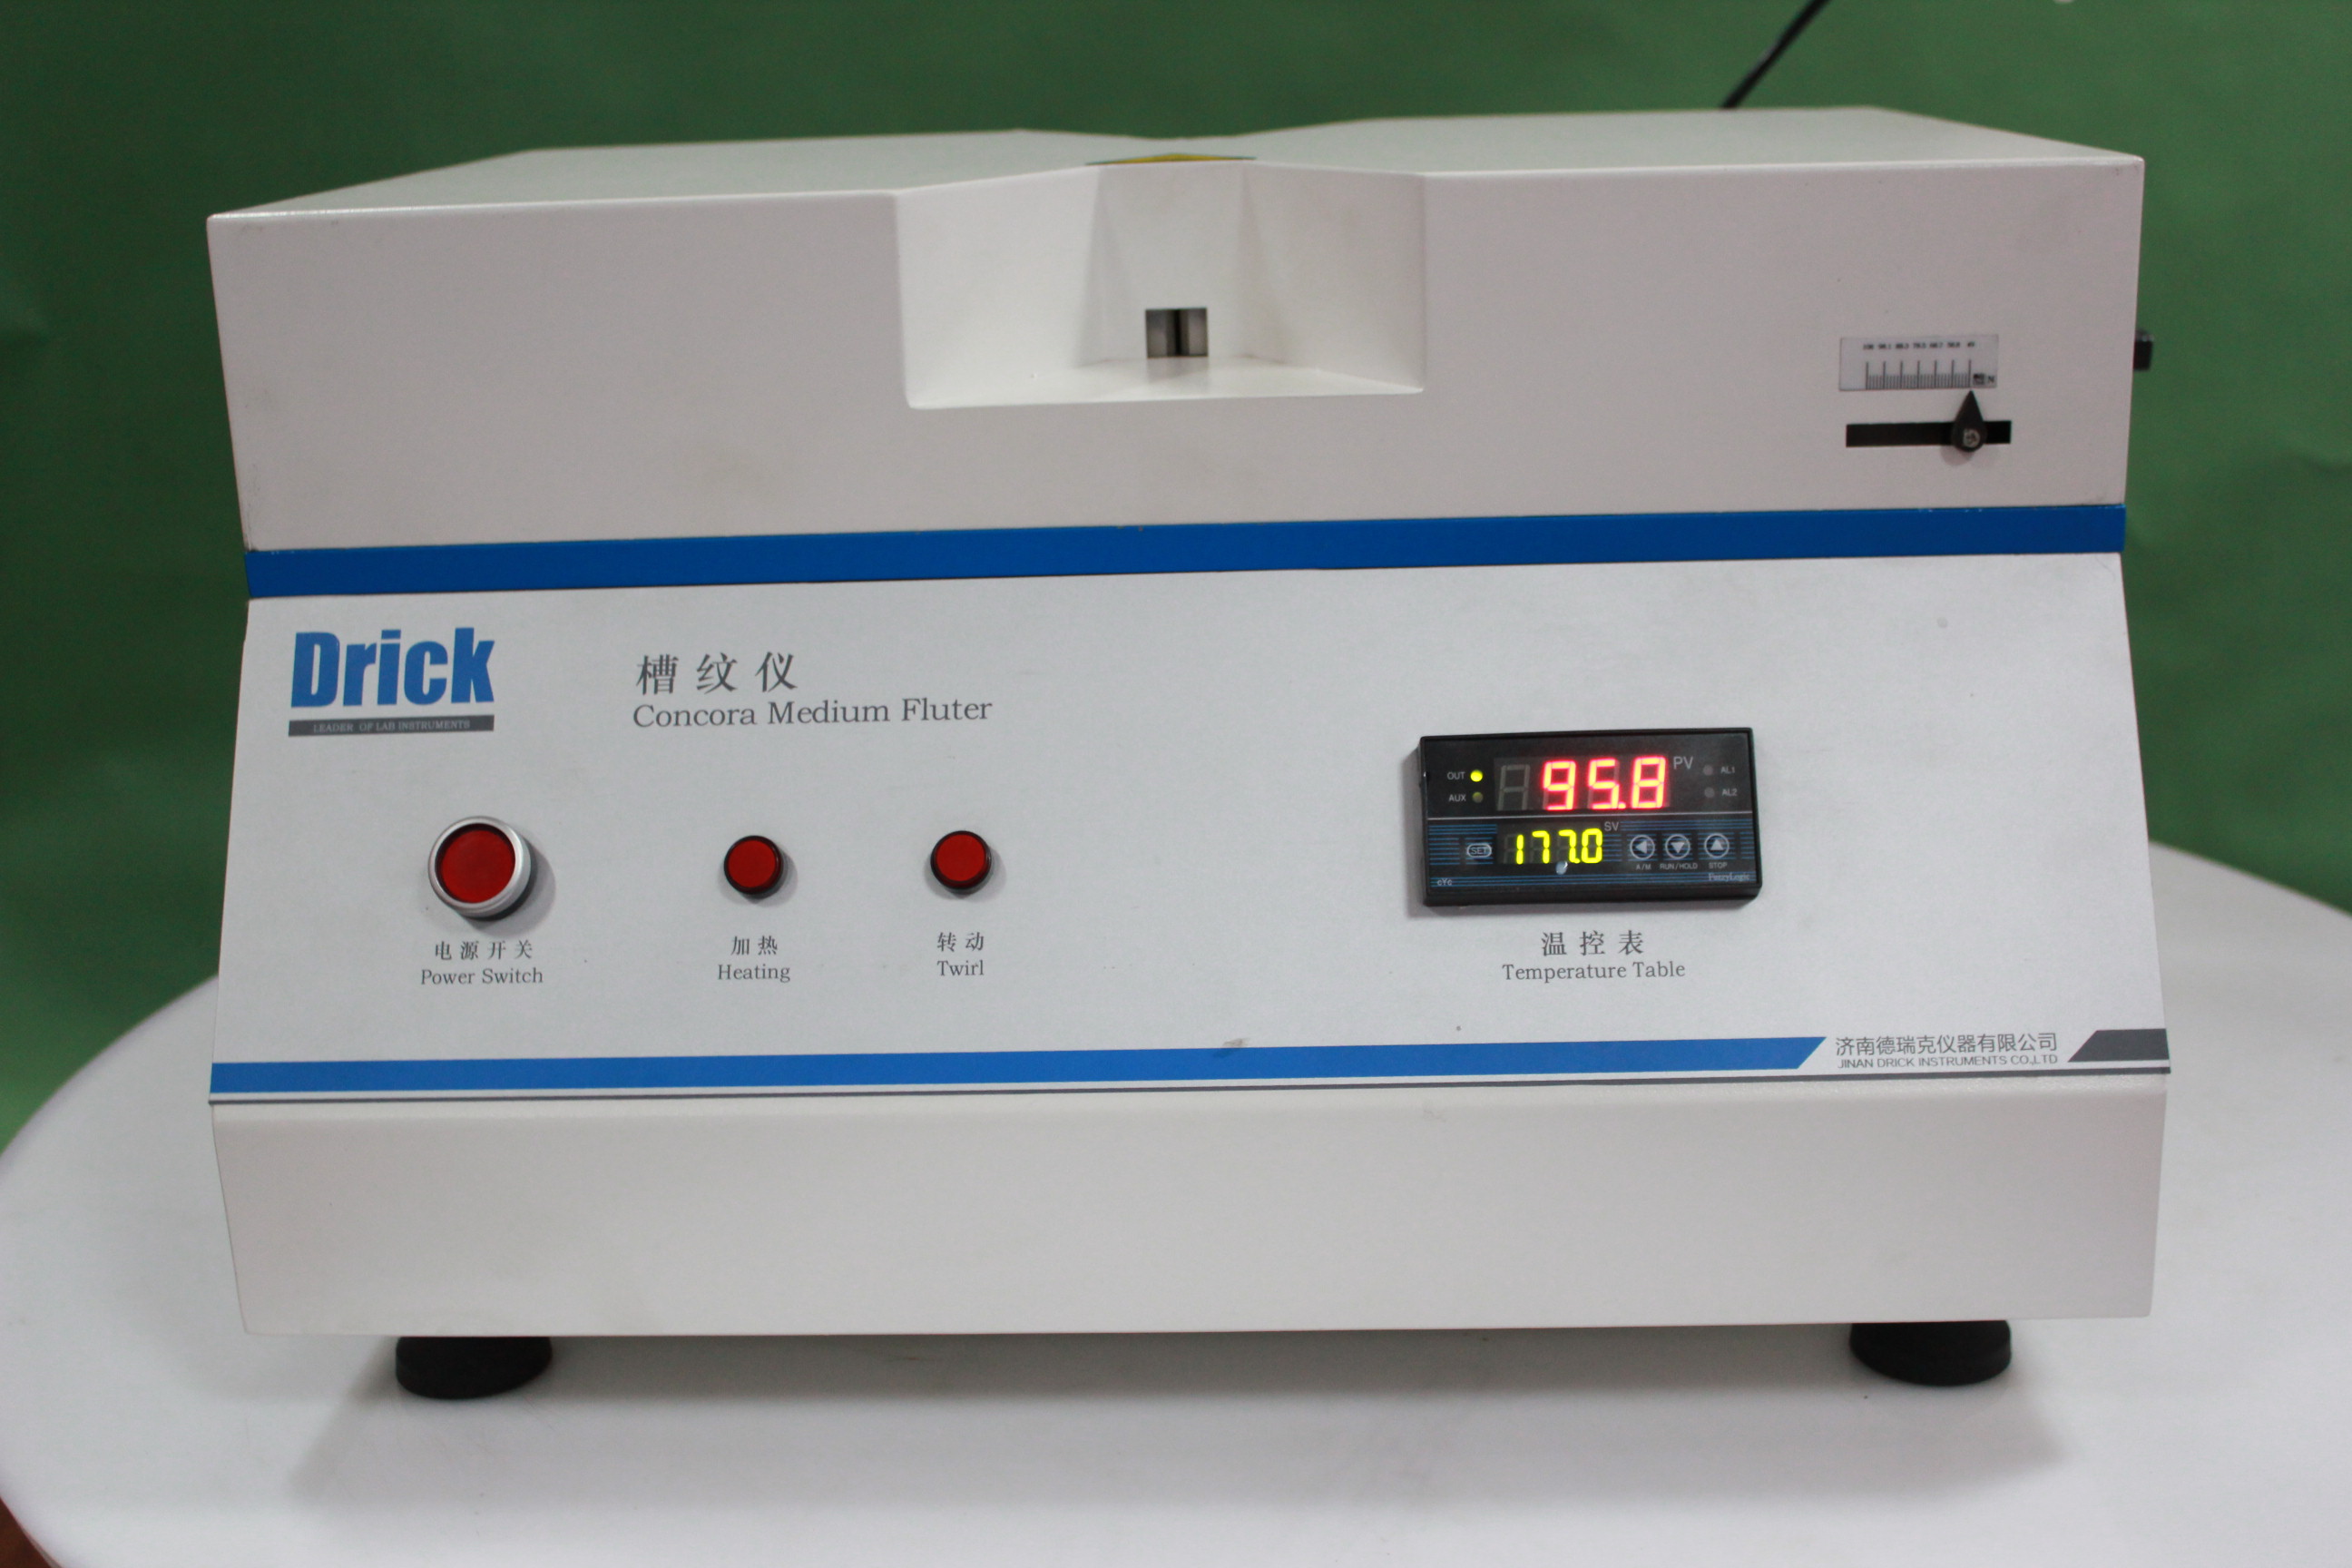 OEM/ODM Supplier Withstanding Voltage Tester - DRK113B Concora Medium Fluter (CCT, CMT) – Drick